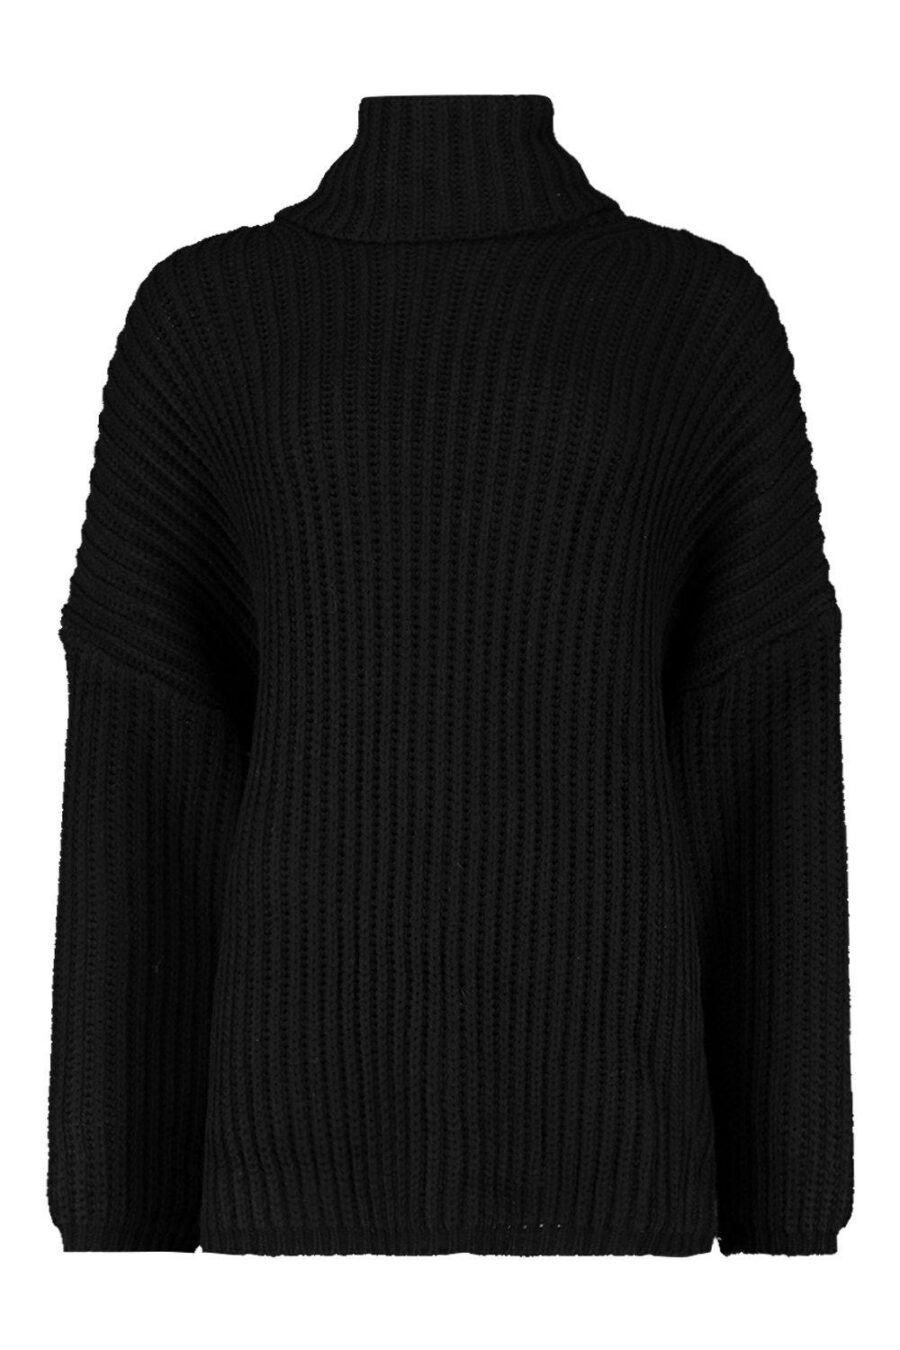 Boohoo-damski-czarny-sweter-oversize-M-L